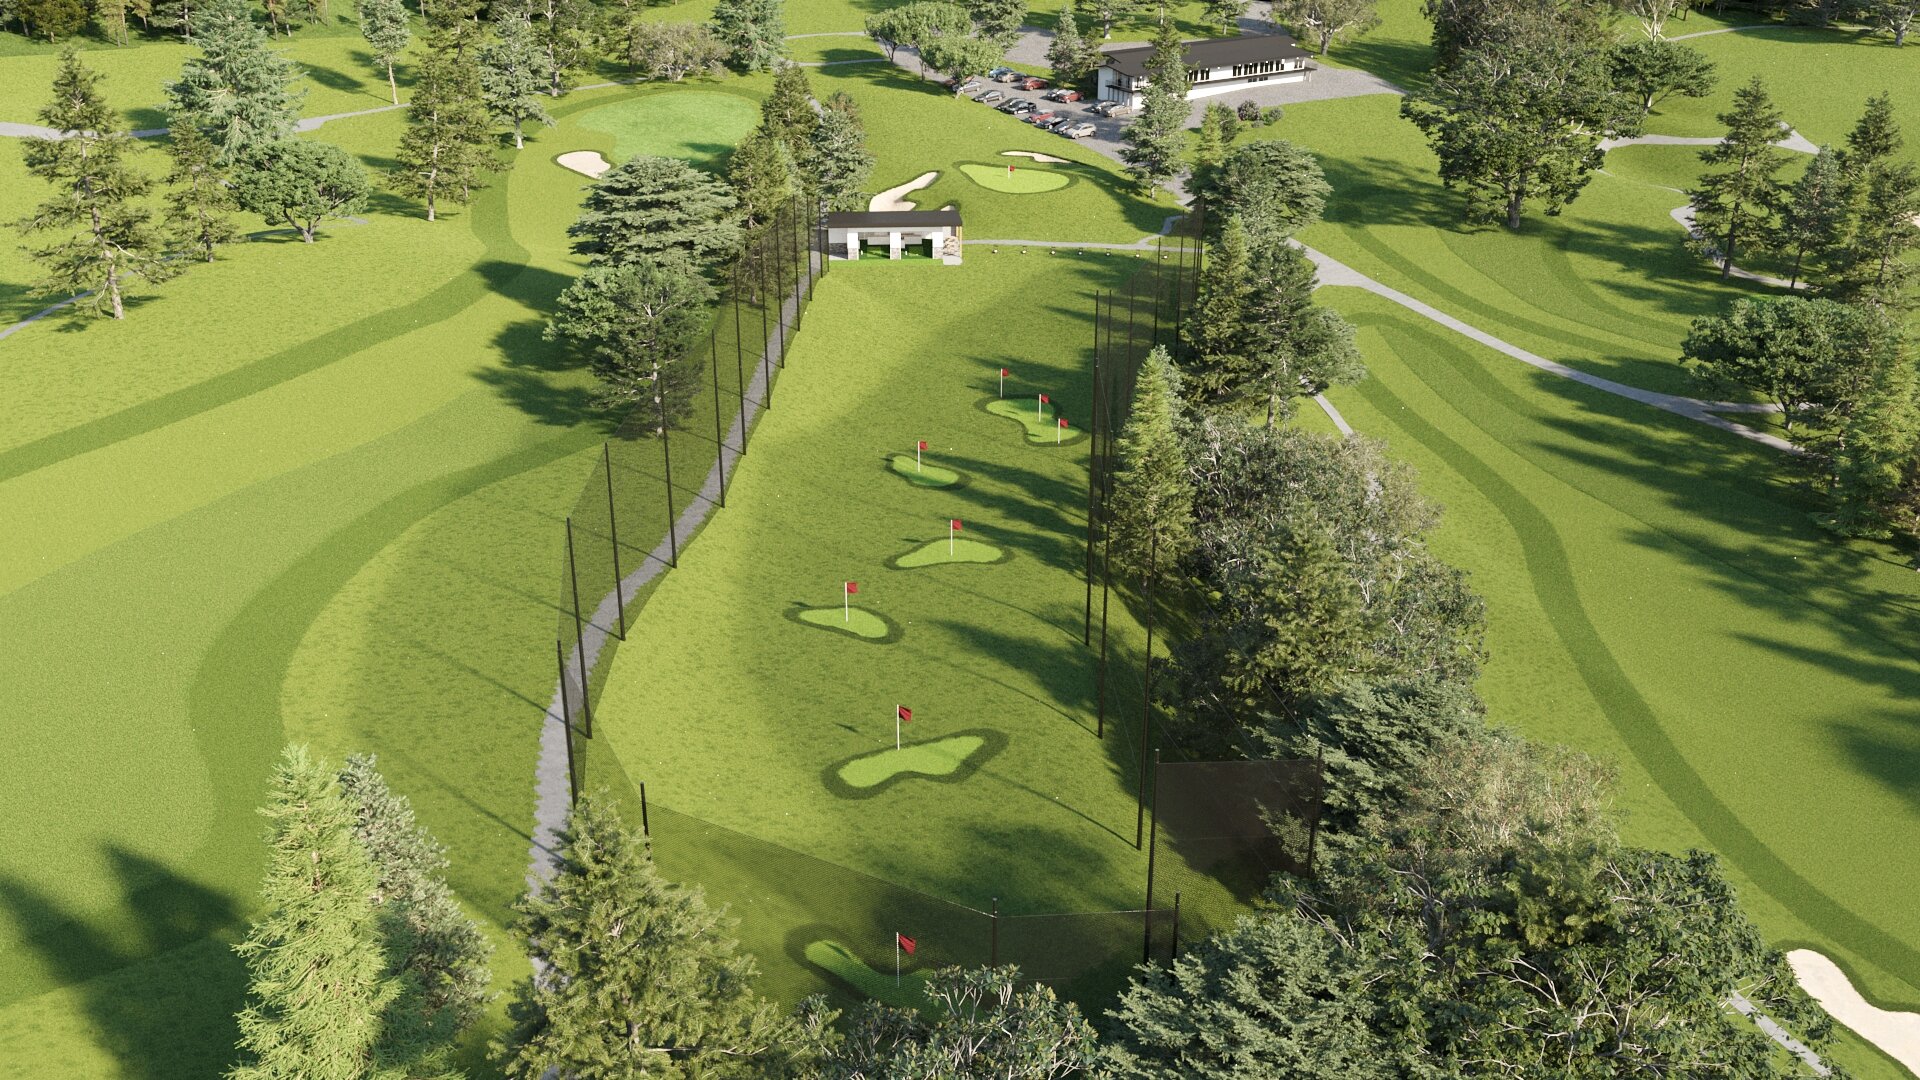 PanoramCGI_Golf Course Range_Golf Driving Range_Golf Practice.jpg